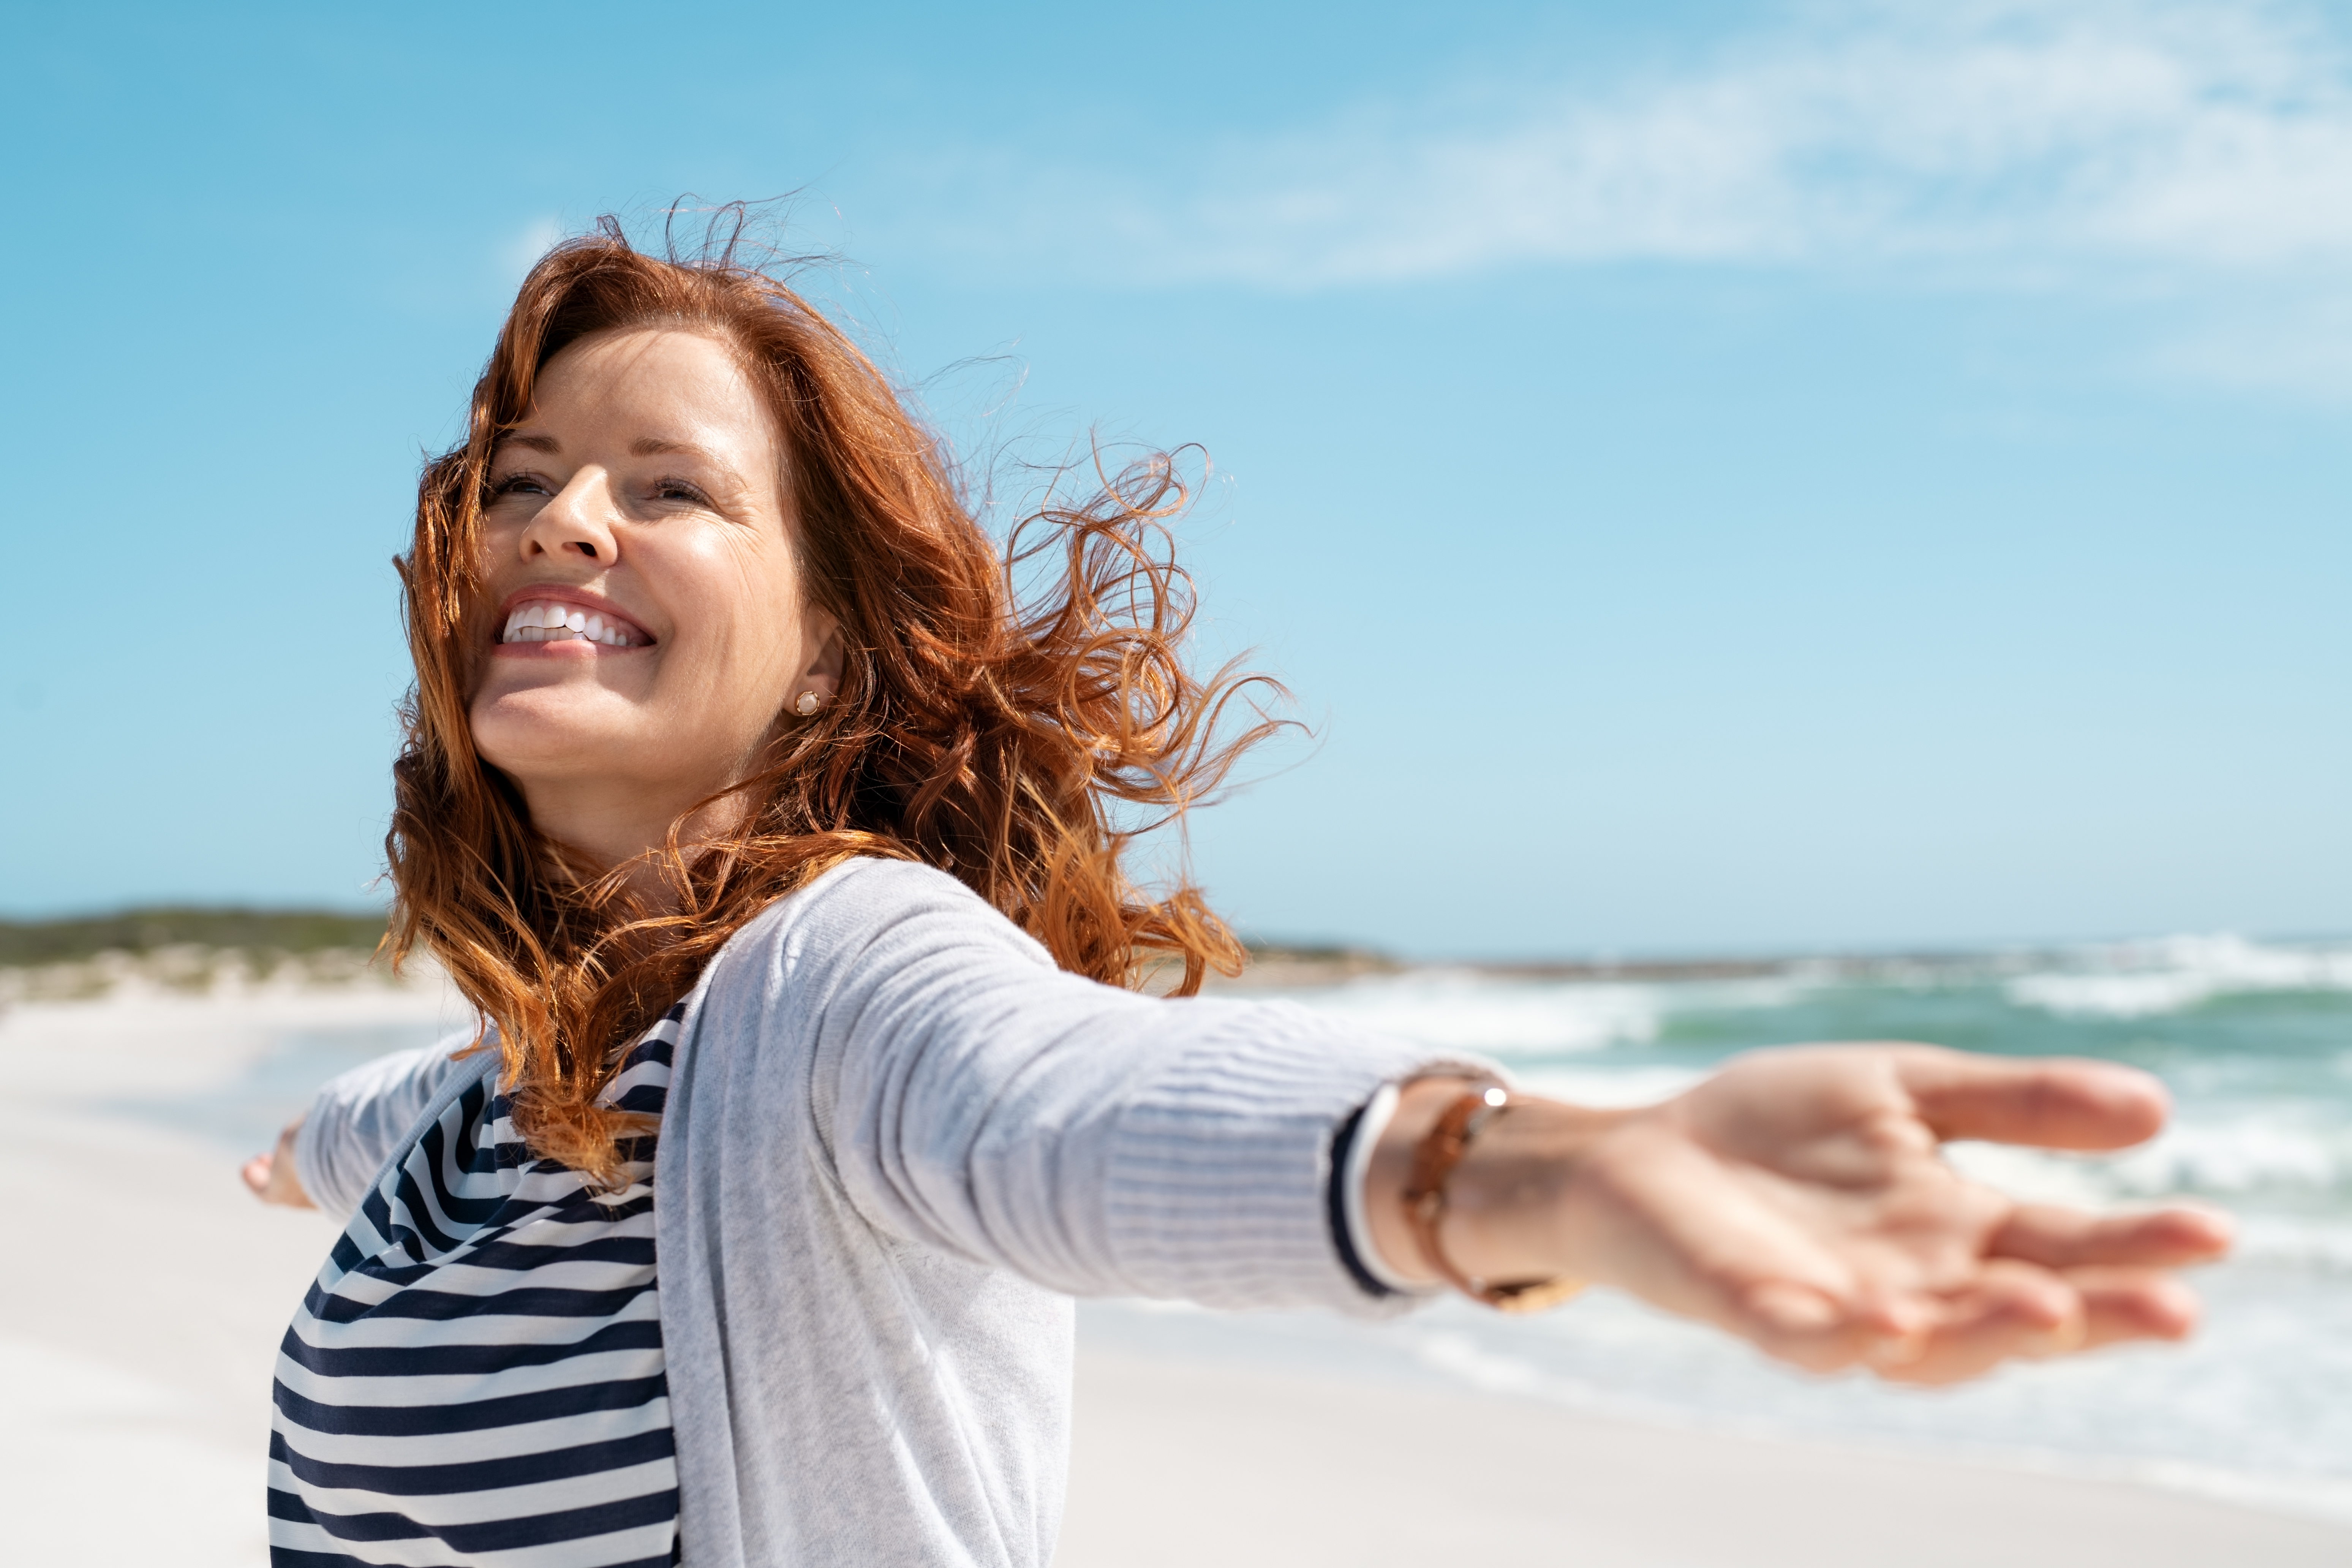 Une femme heureuse au bord de la mer | Source : Shutterstock